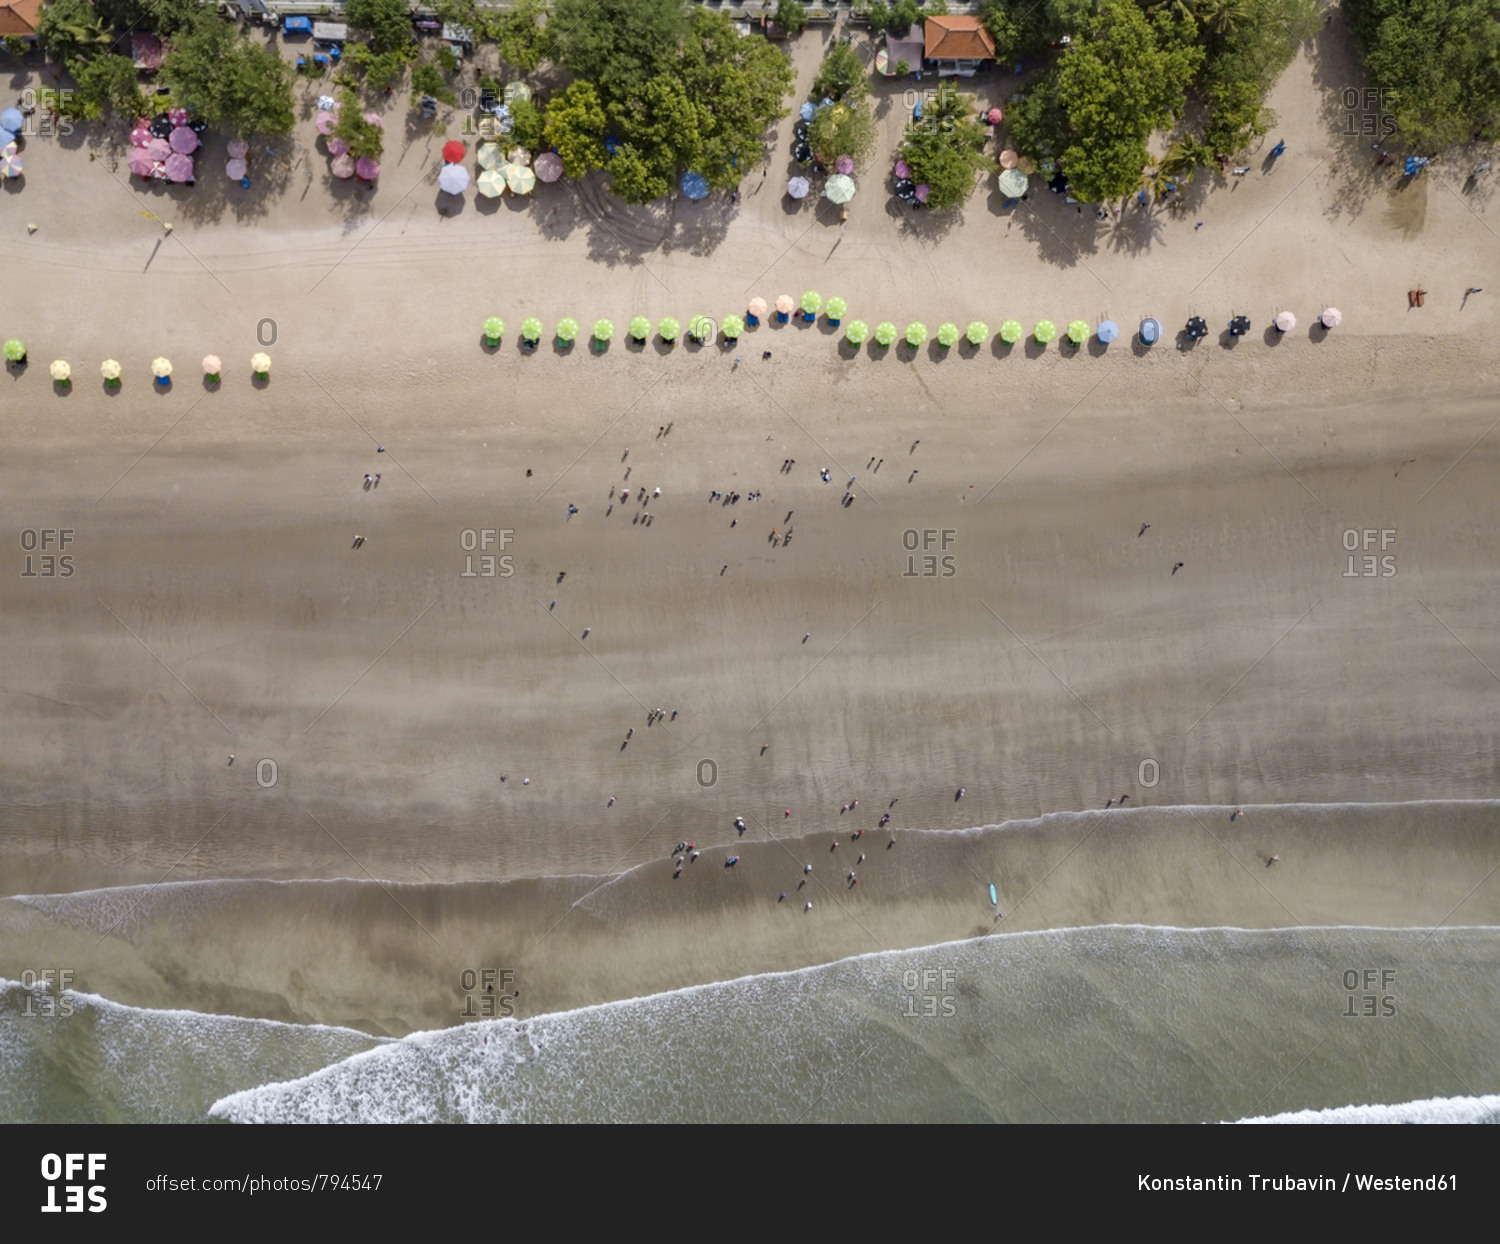 Bali- Kuta Beach- row of beach umbrellas and people on the beach- aerial view